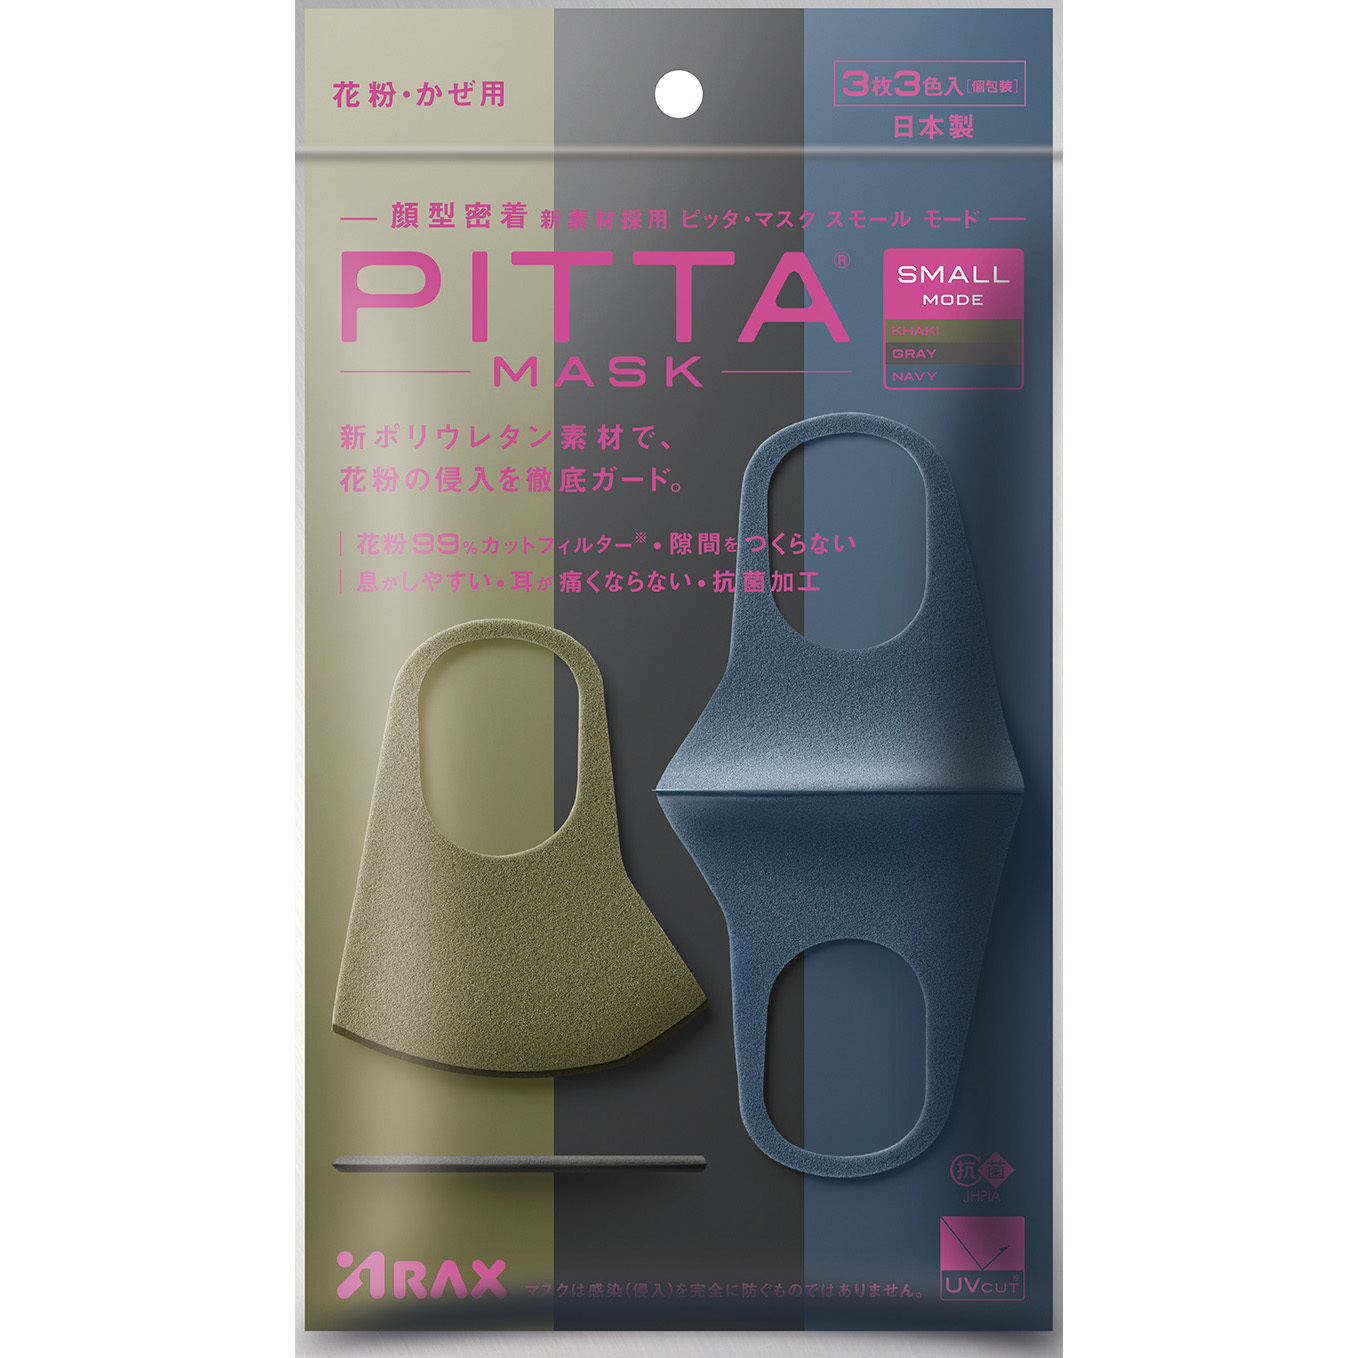 SMALL MODE PITTA MASK(ピッタマスク) スモールサイズ 1パック(3